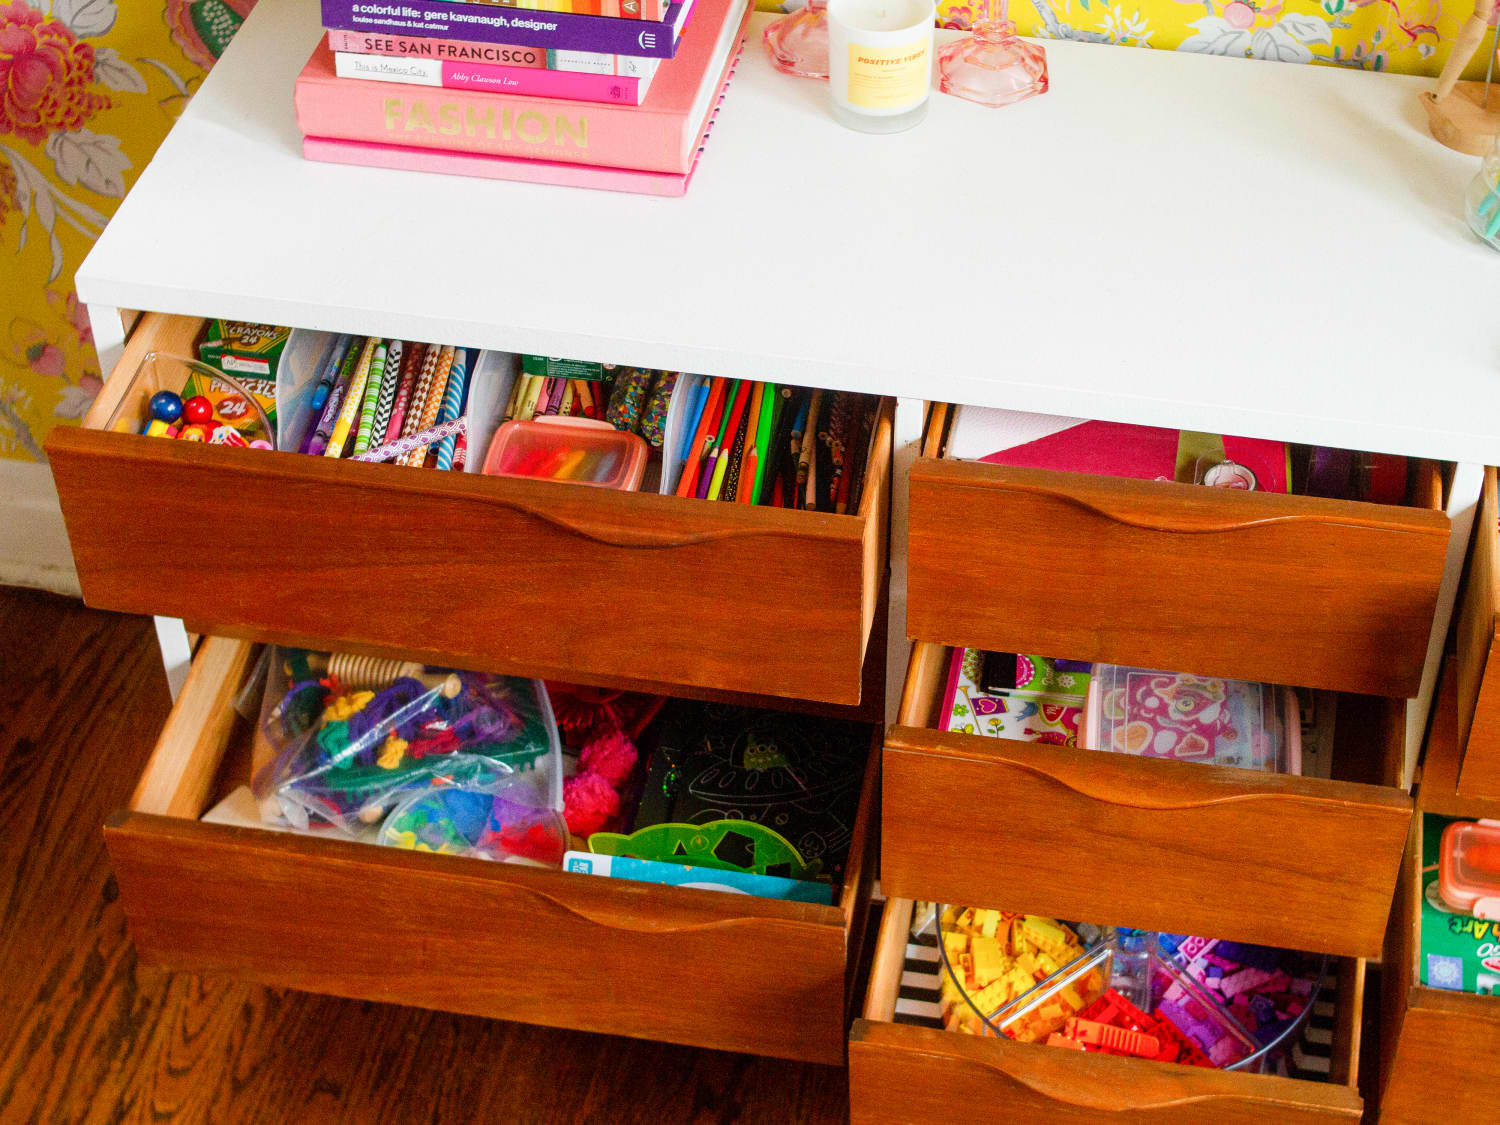 Guest Picks: 20 Ways to Organize Kids' Art Supplies